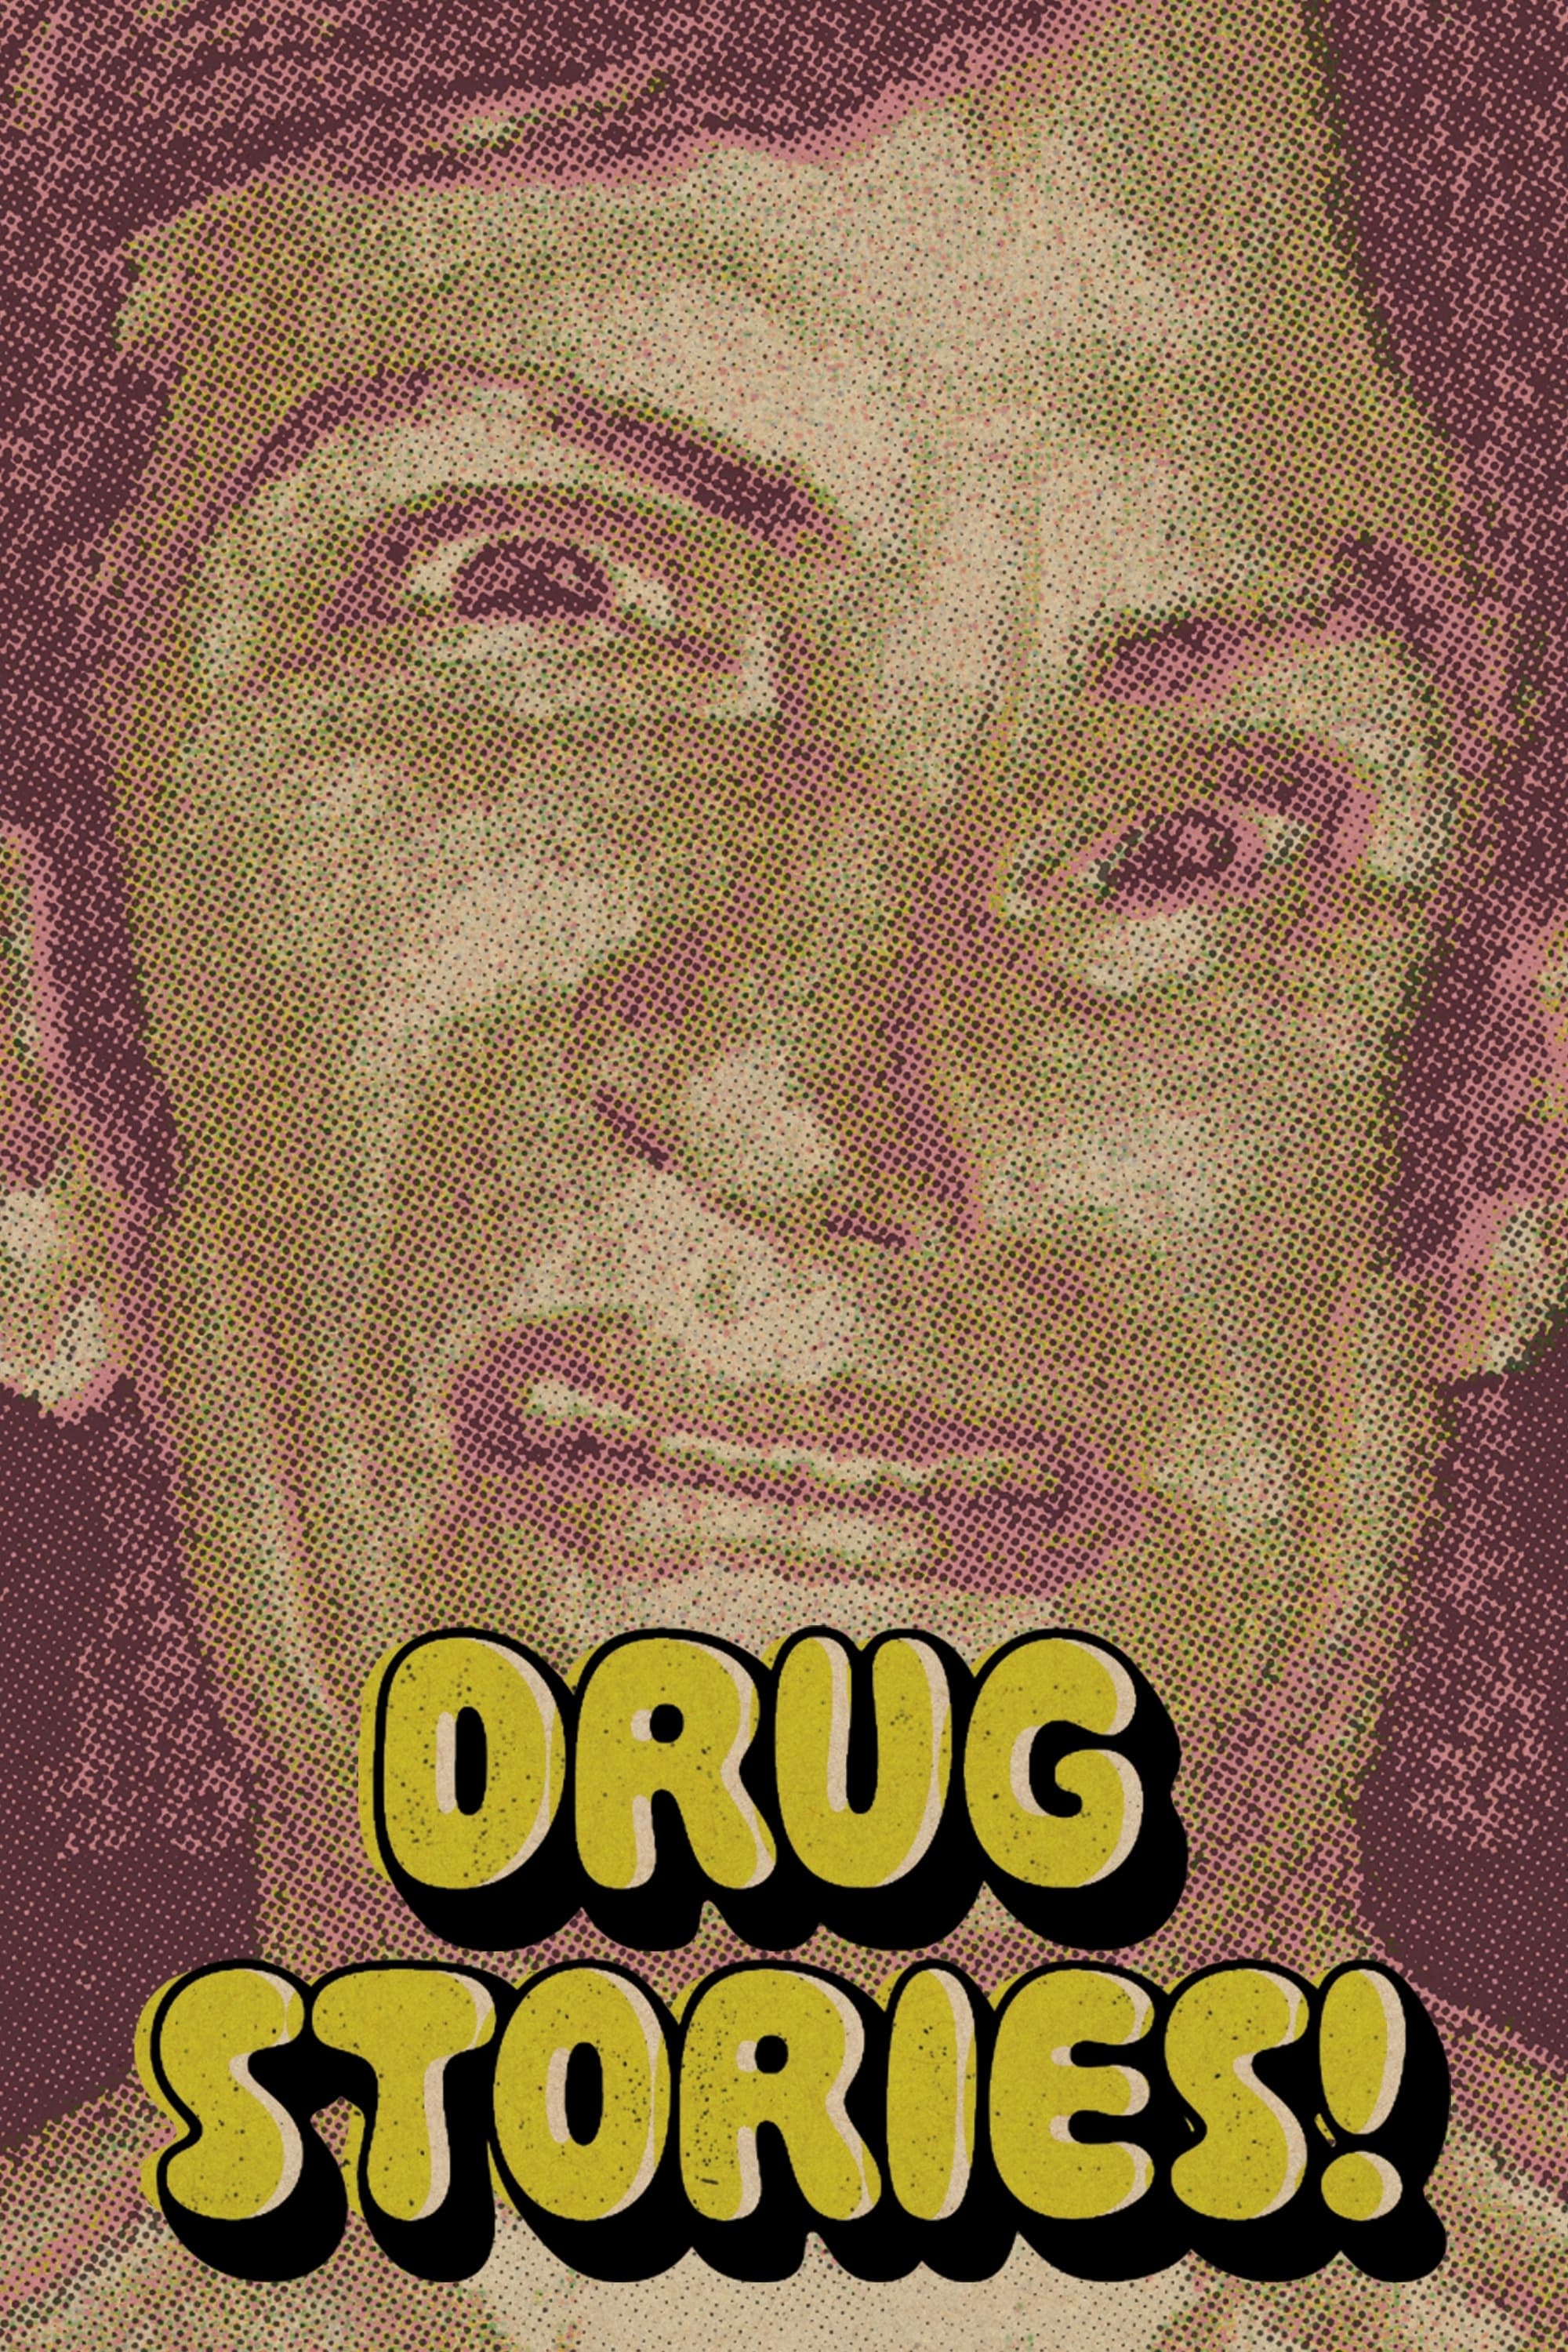 Drug Stories! Narcotic Nightmares and Hallucinogenic Hellrides